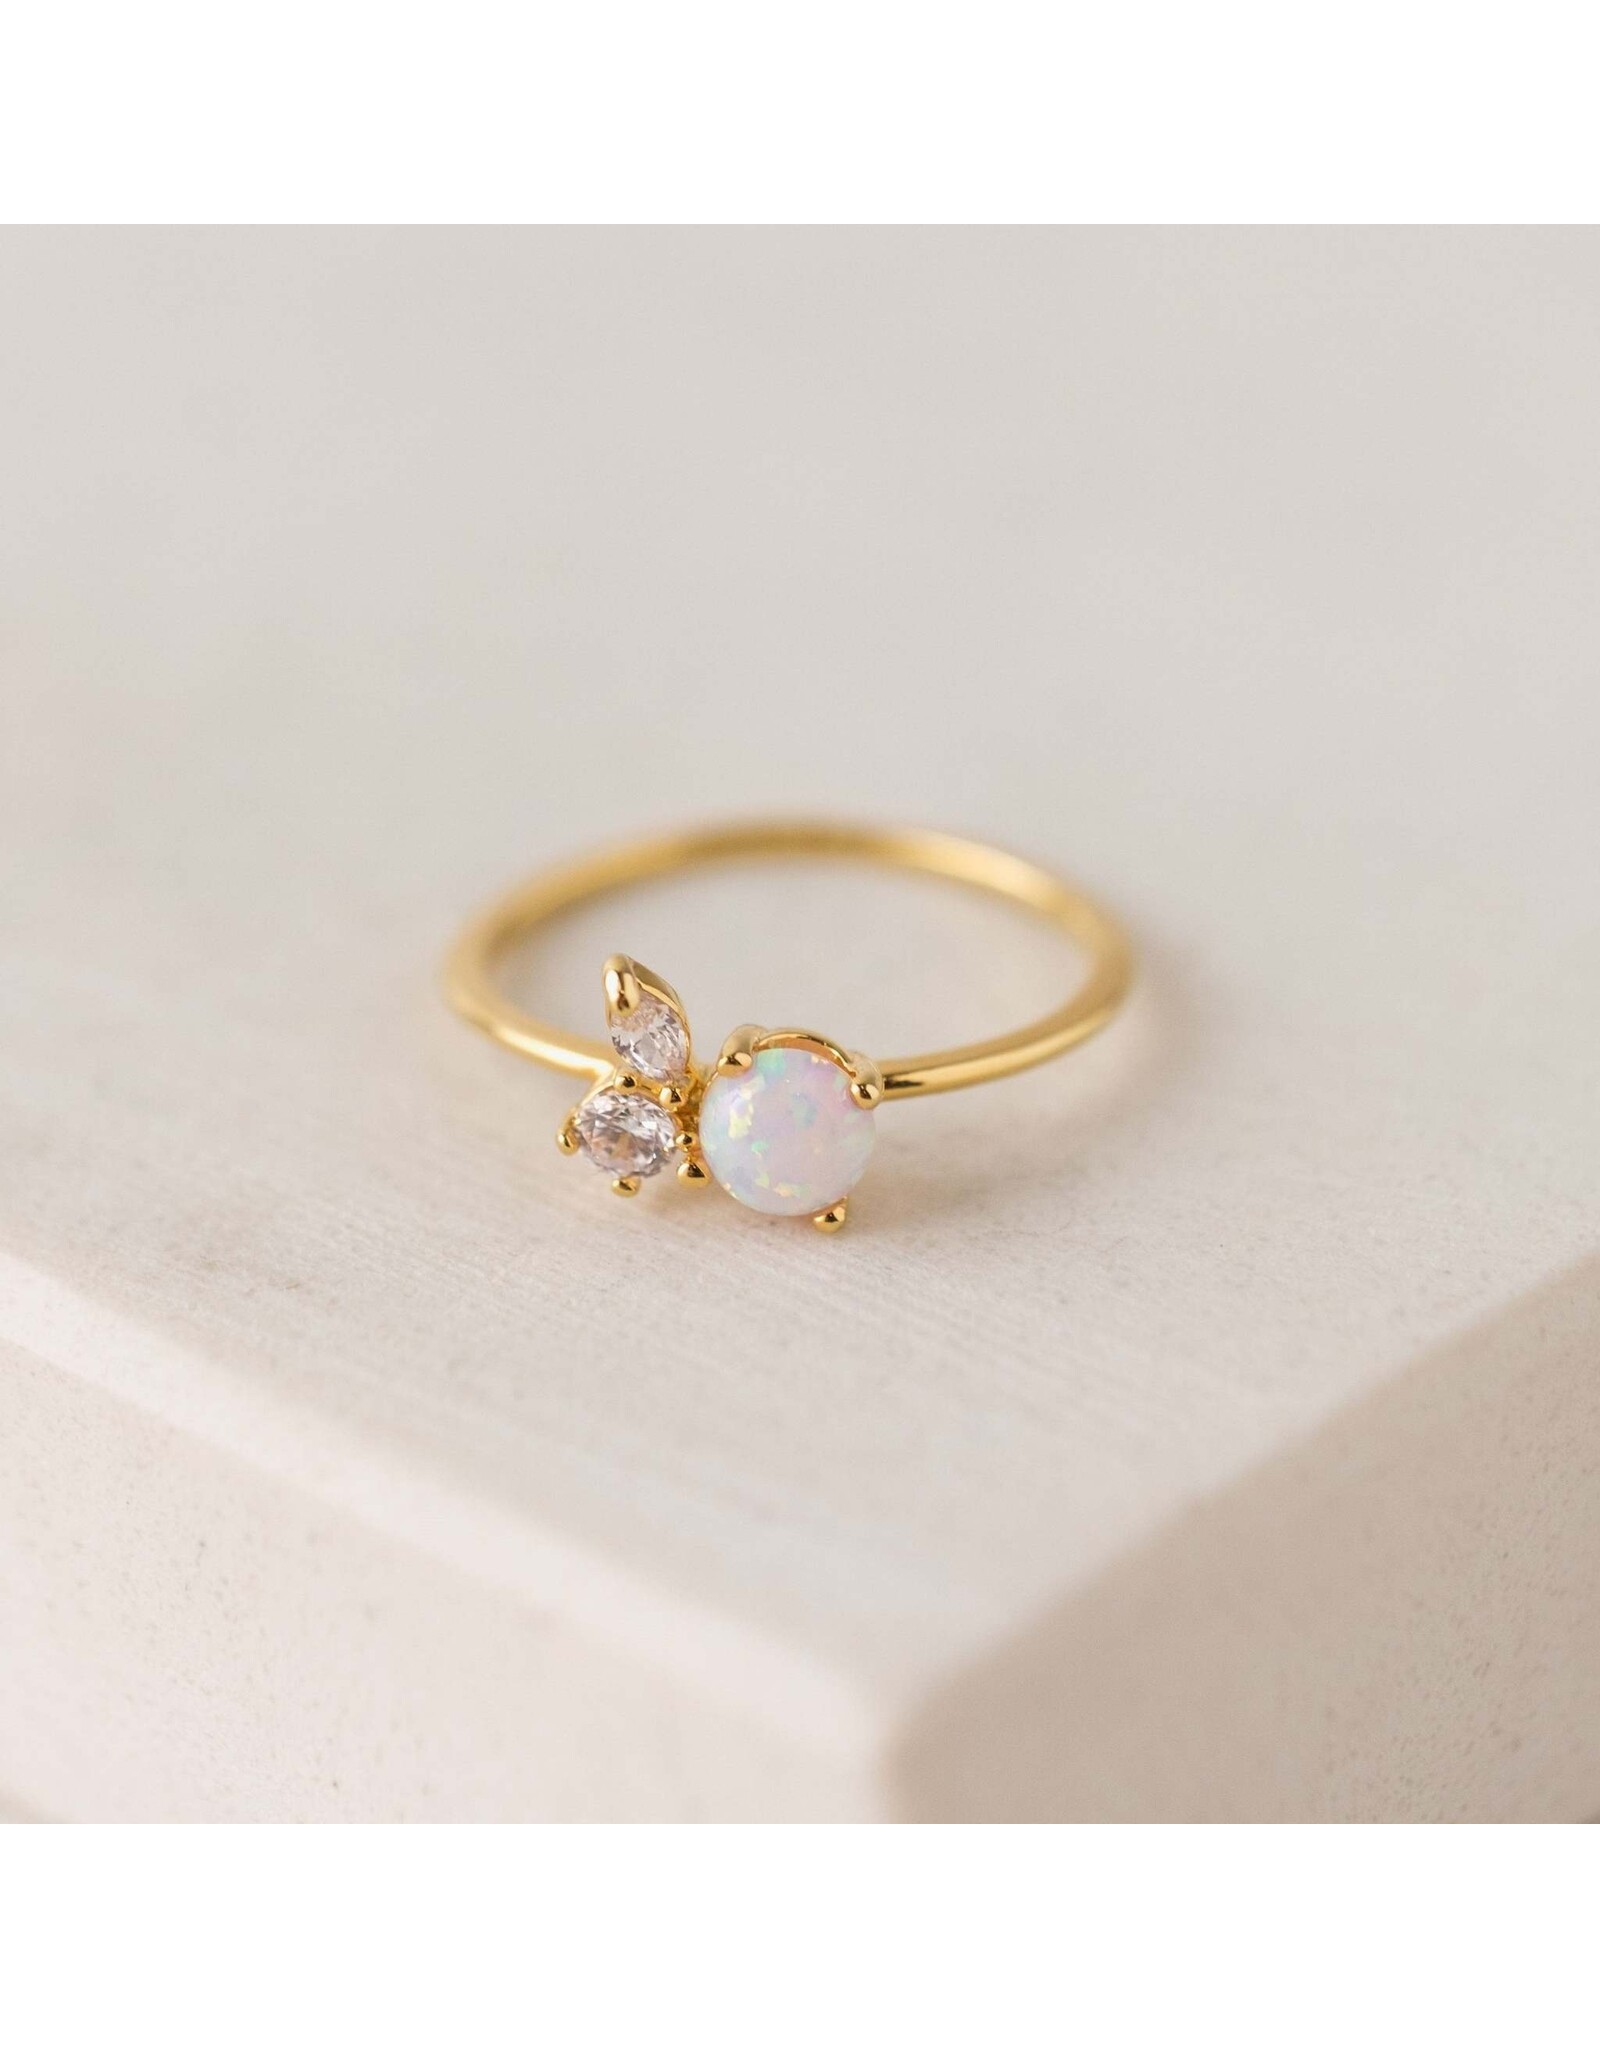 Adora Ring - Opal - Size 7